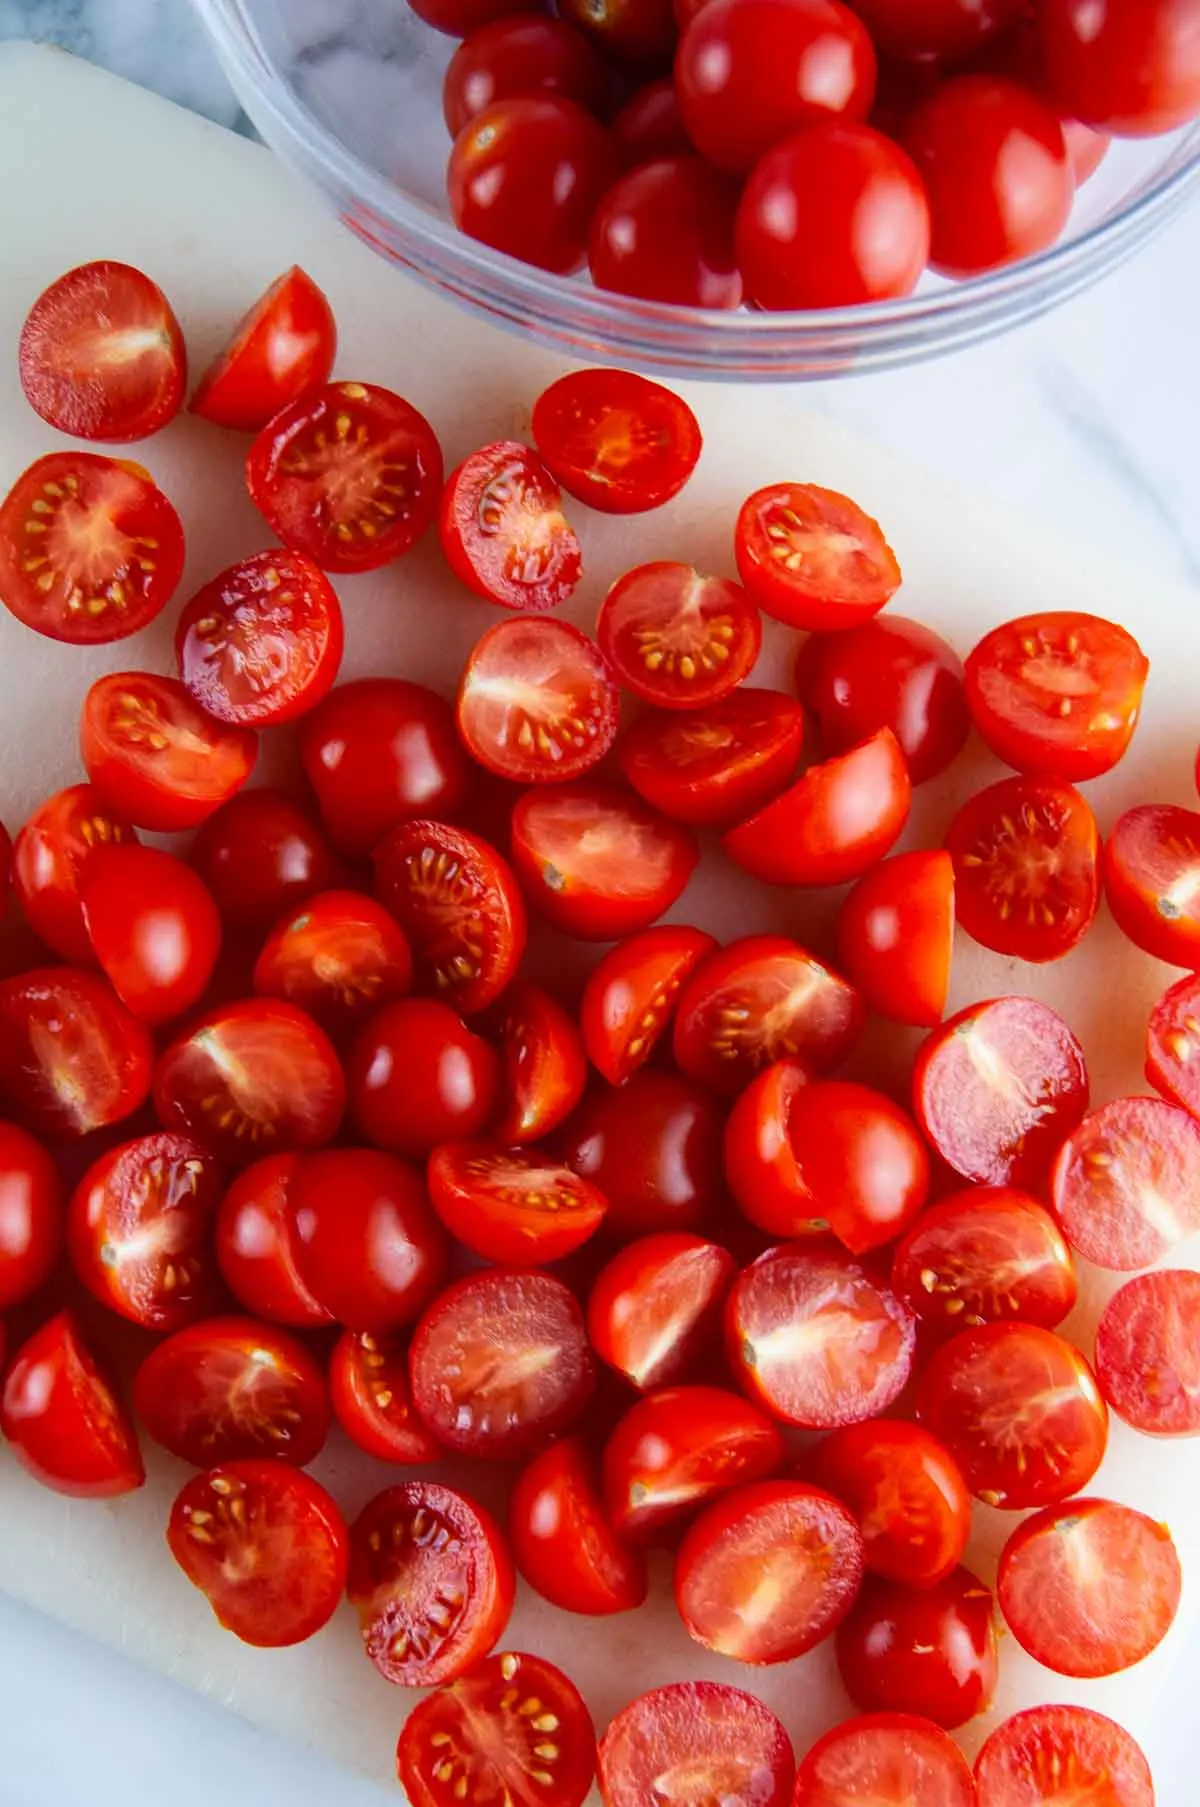 Cut the cherry tomatoes in half for burrata caprese salad.